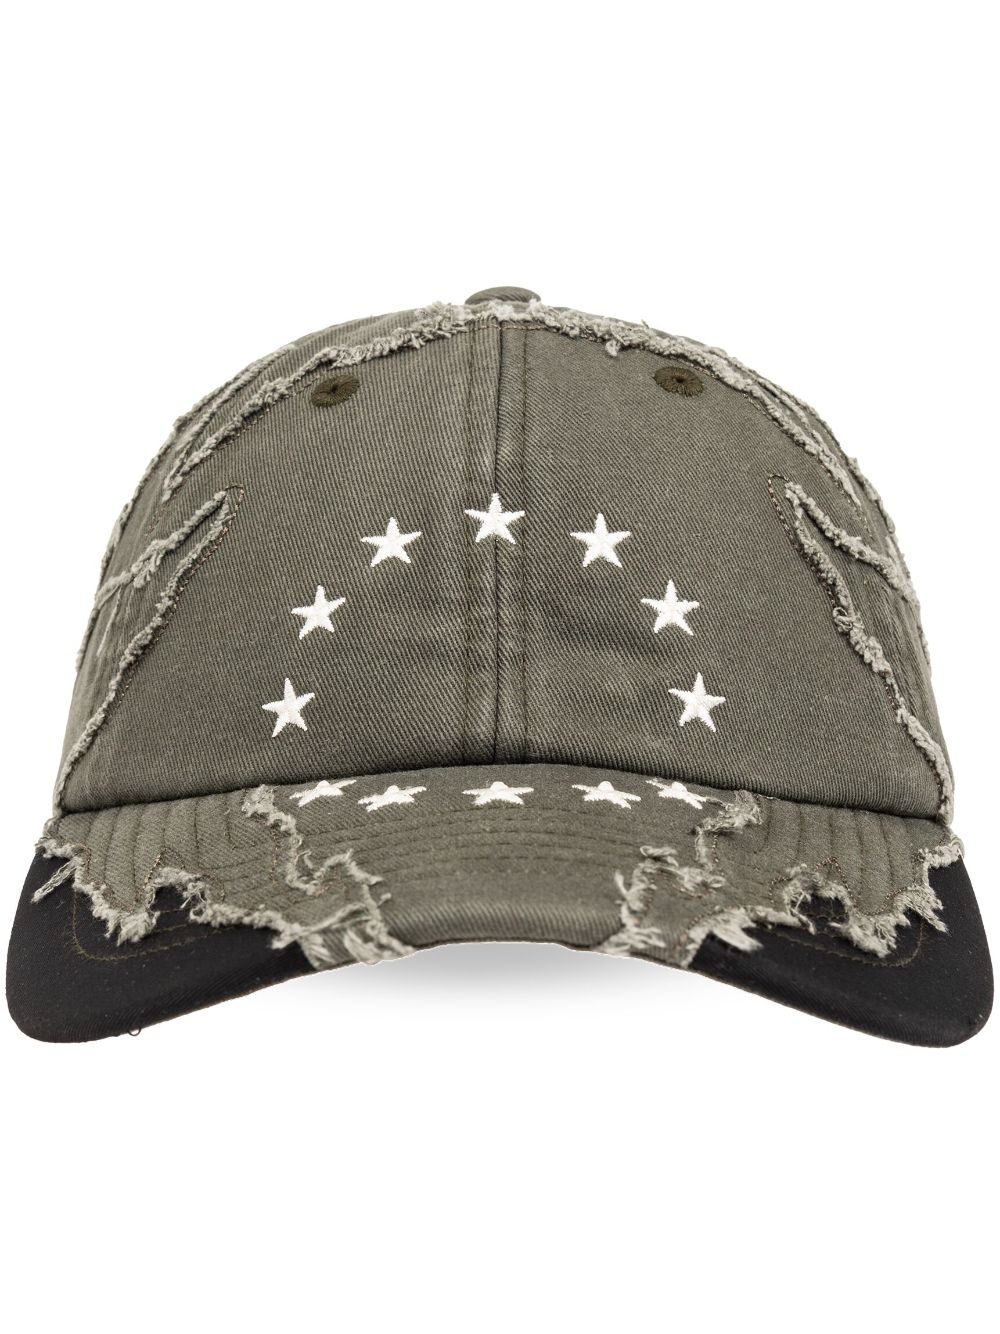 embroidered baseball cap - 1